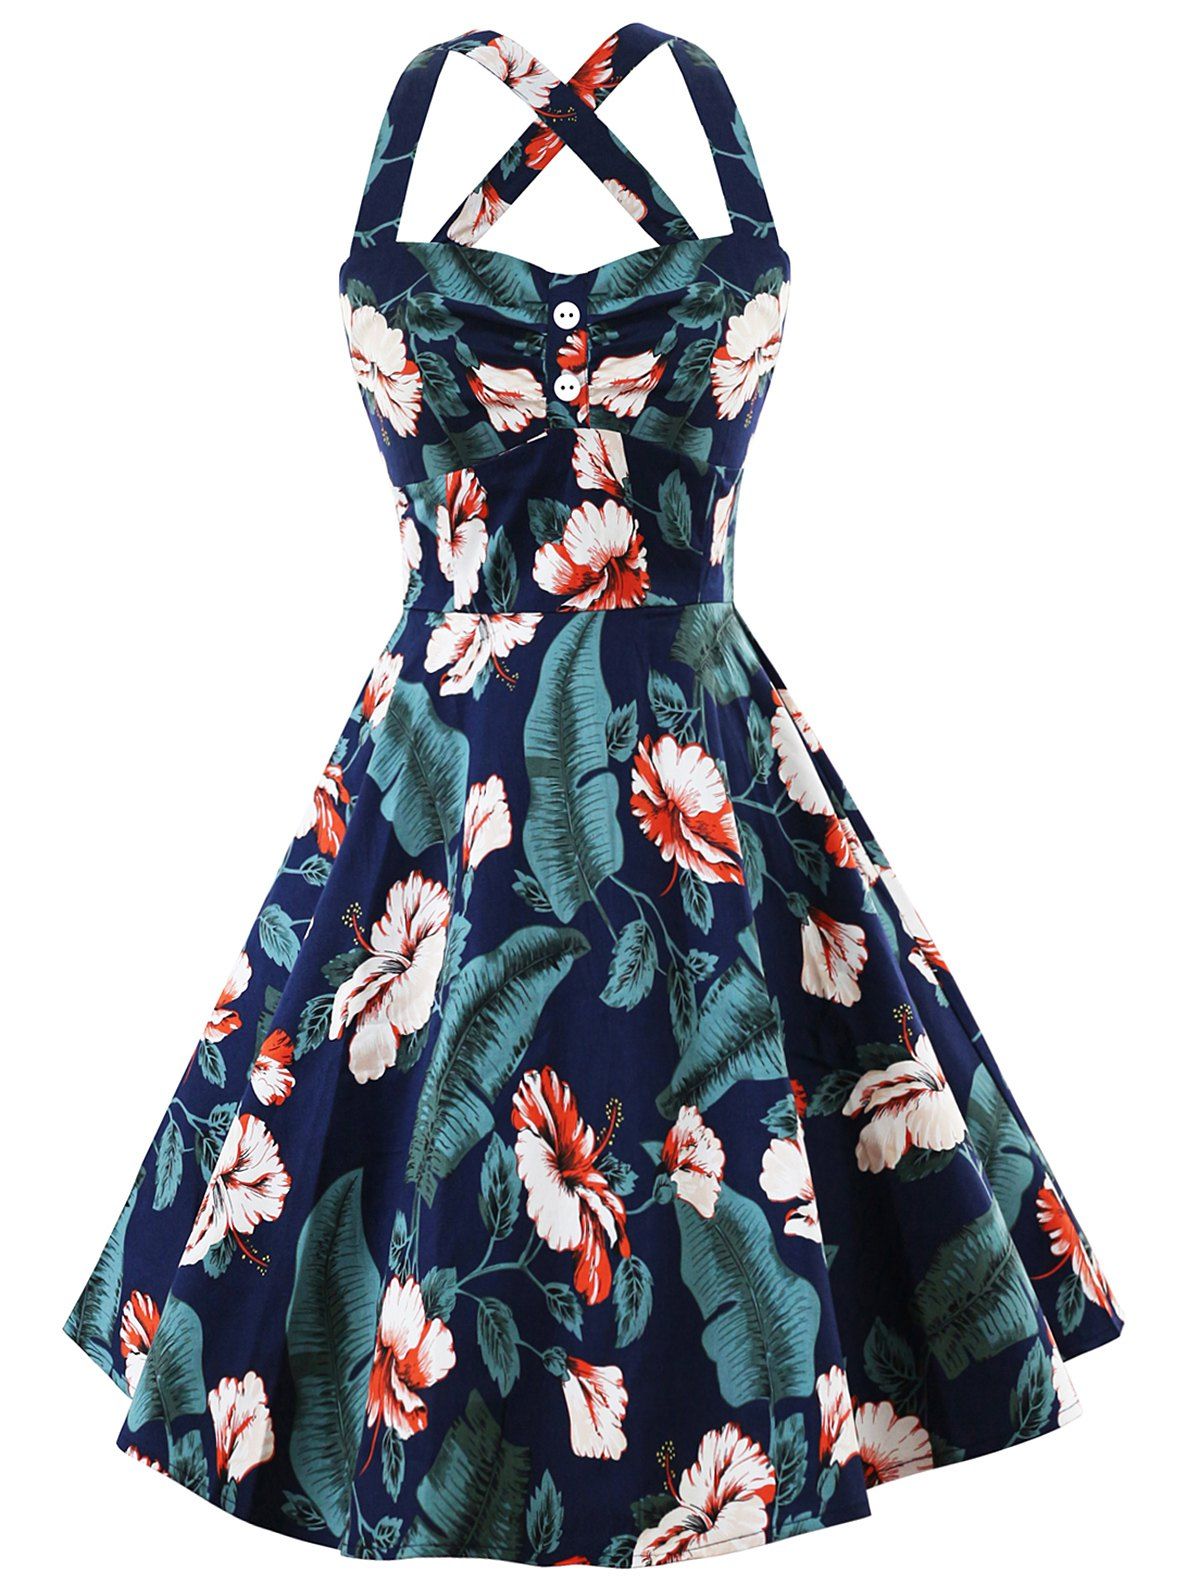 Cross Back Flower Print Vintage Dress - DENIM DARK BLUE S